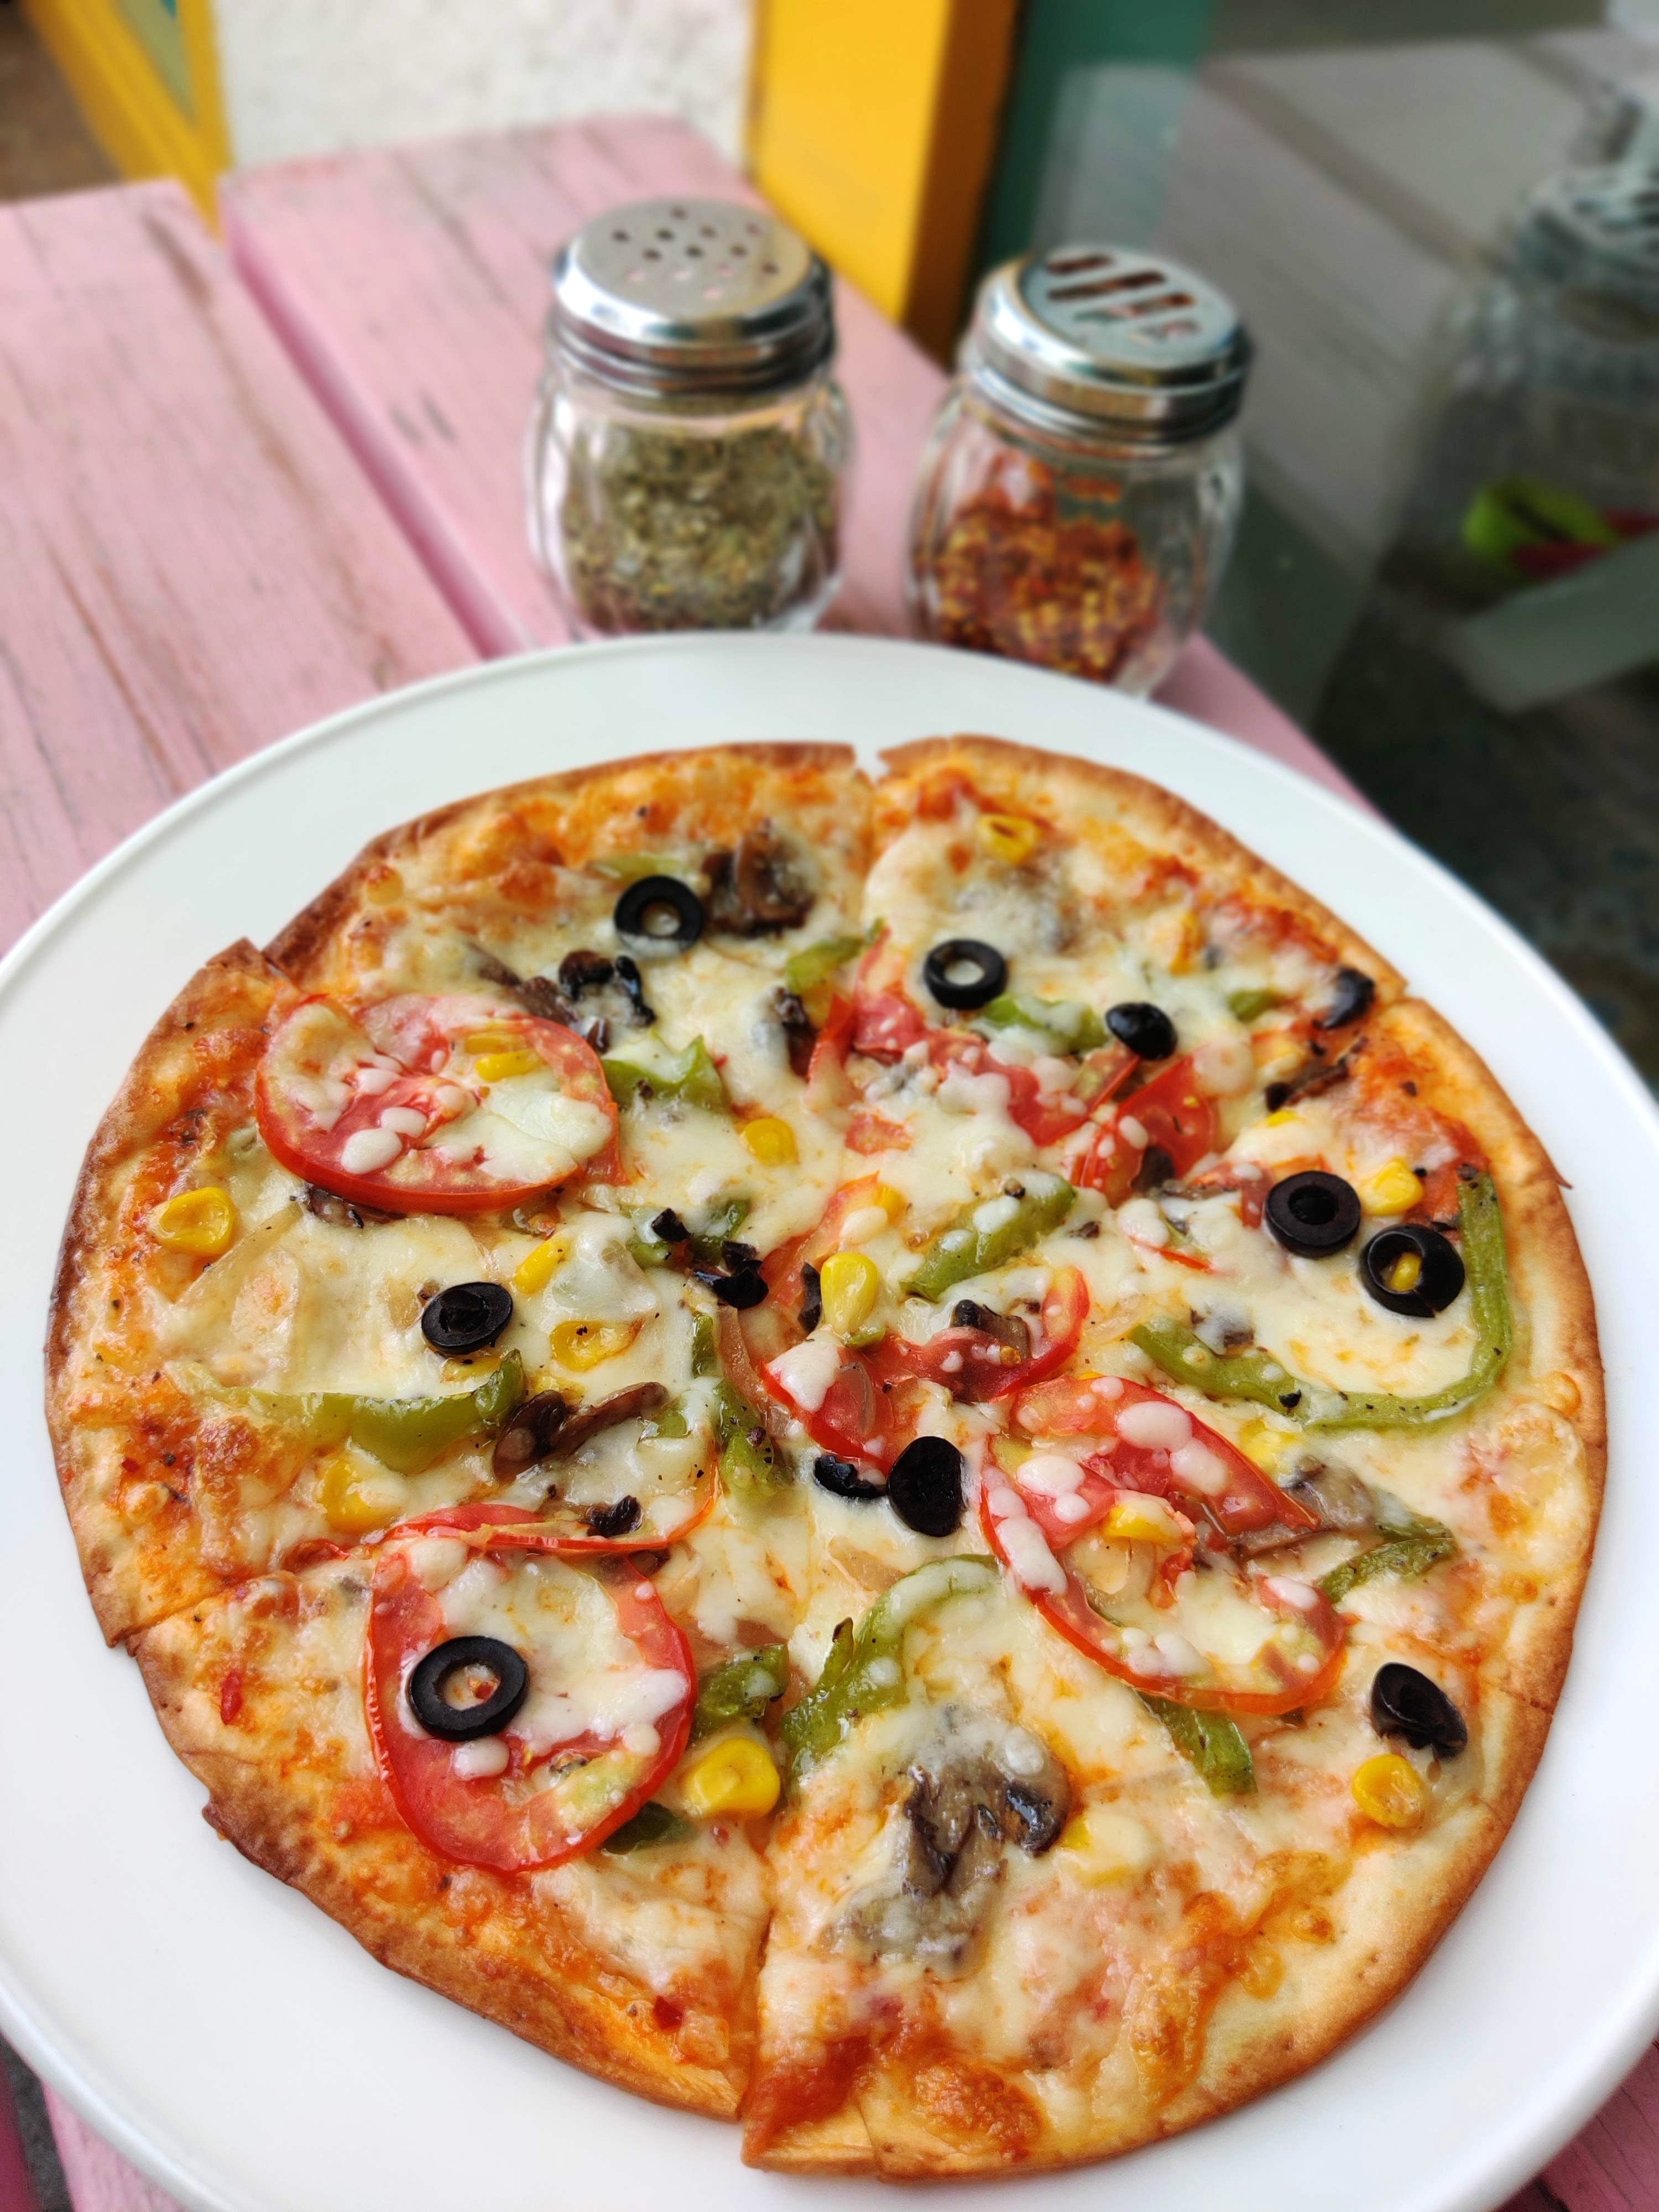 Dish,Pizza,Food,Cuisine,Pizza cheese,Junk food,California-style pizza,Ingredient,Flatbread,Italian food